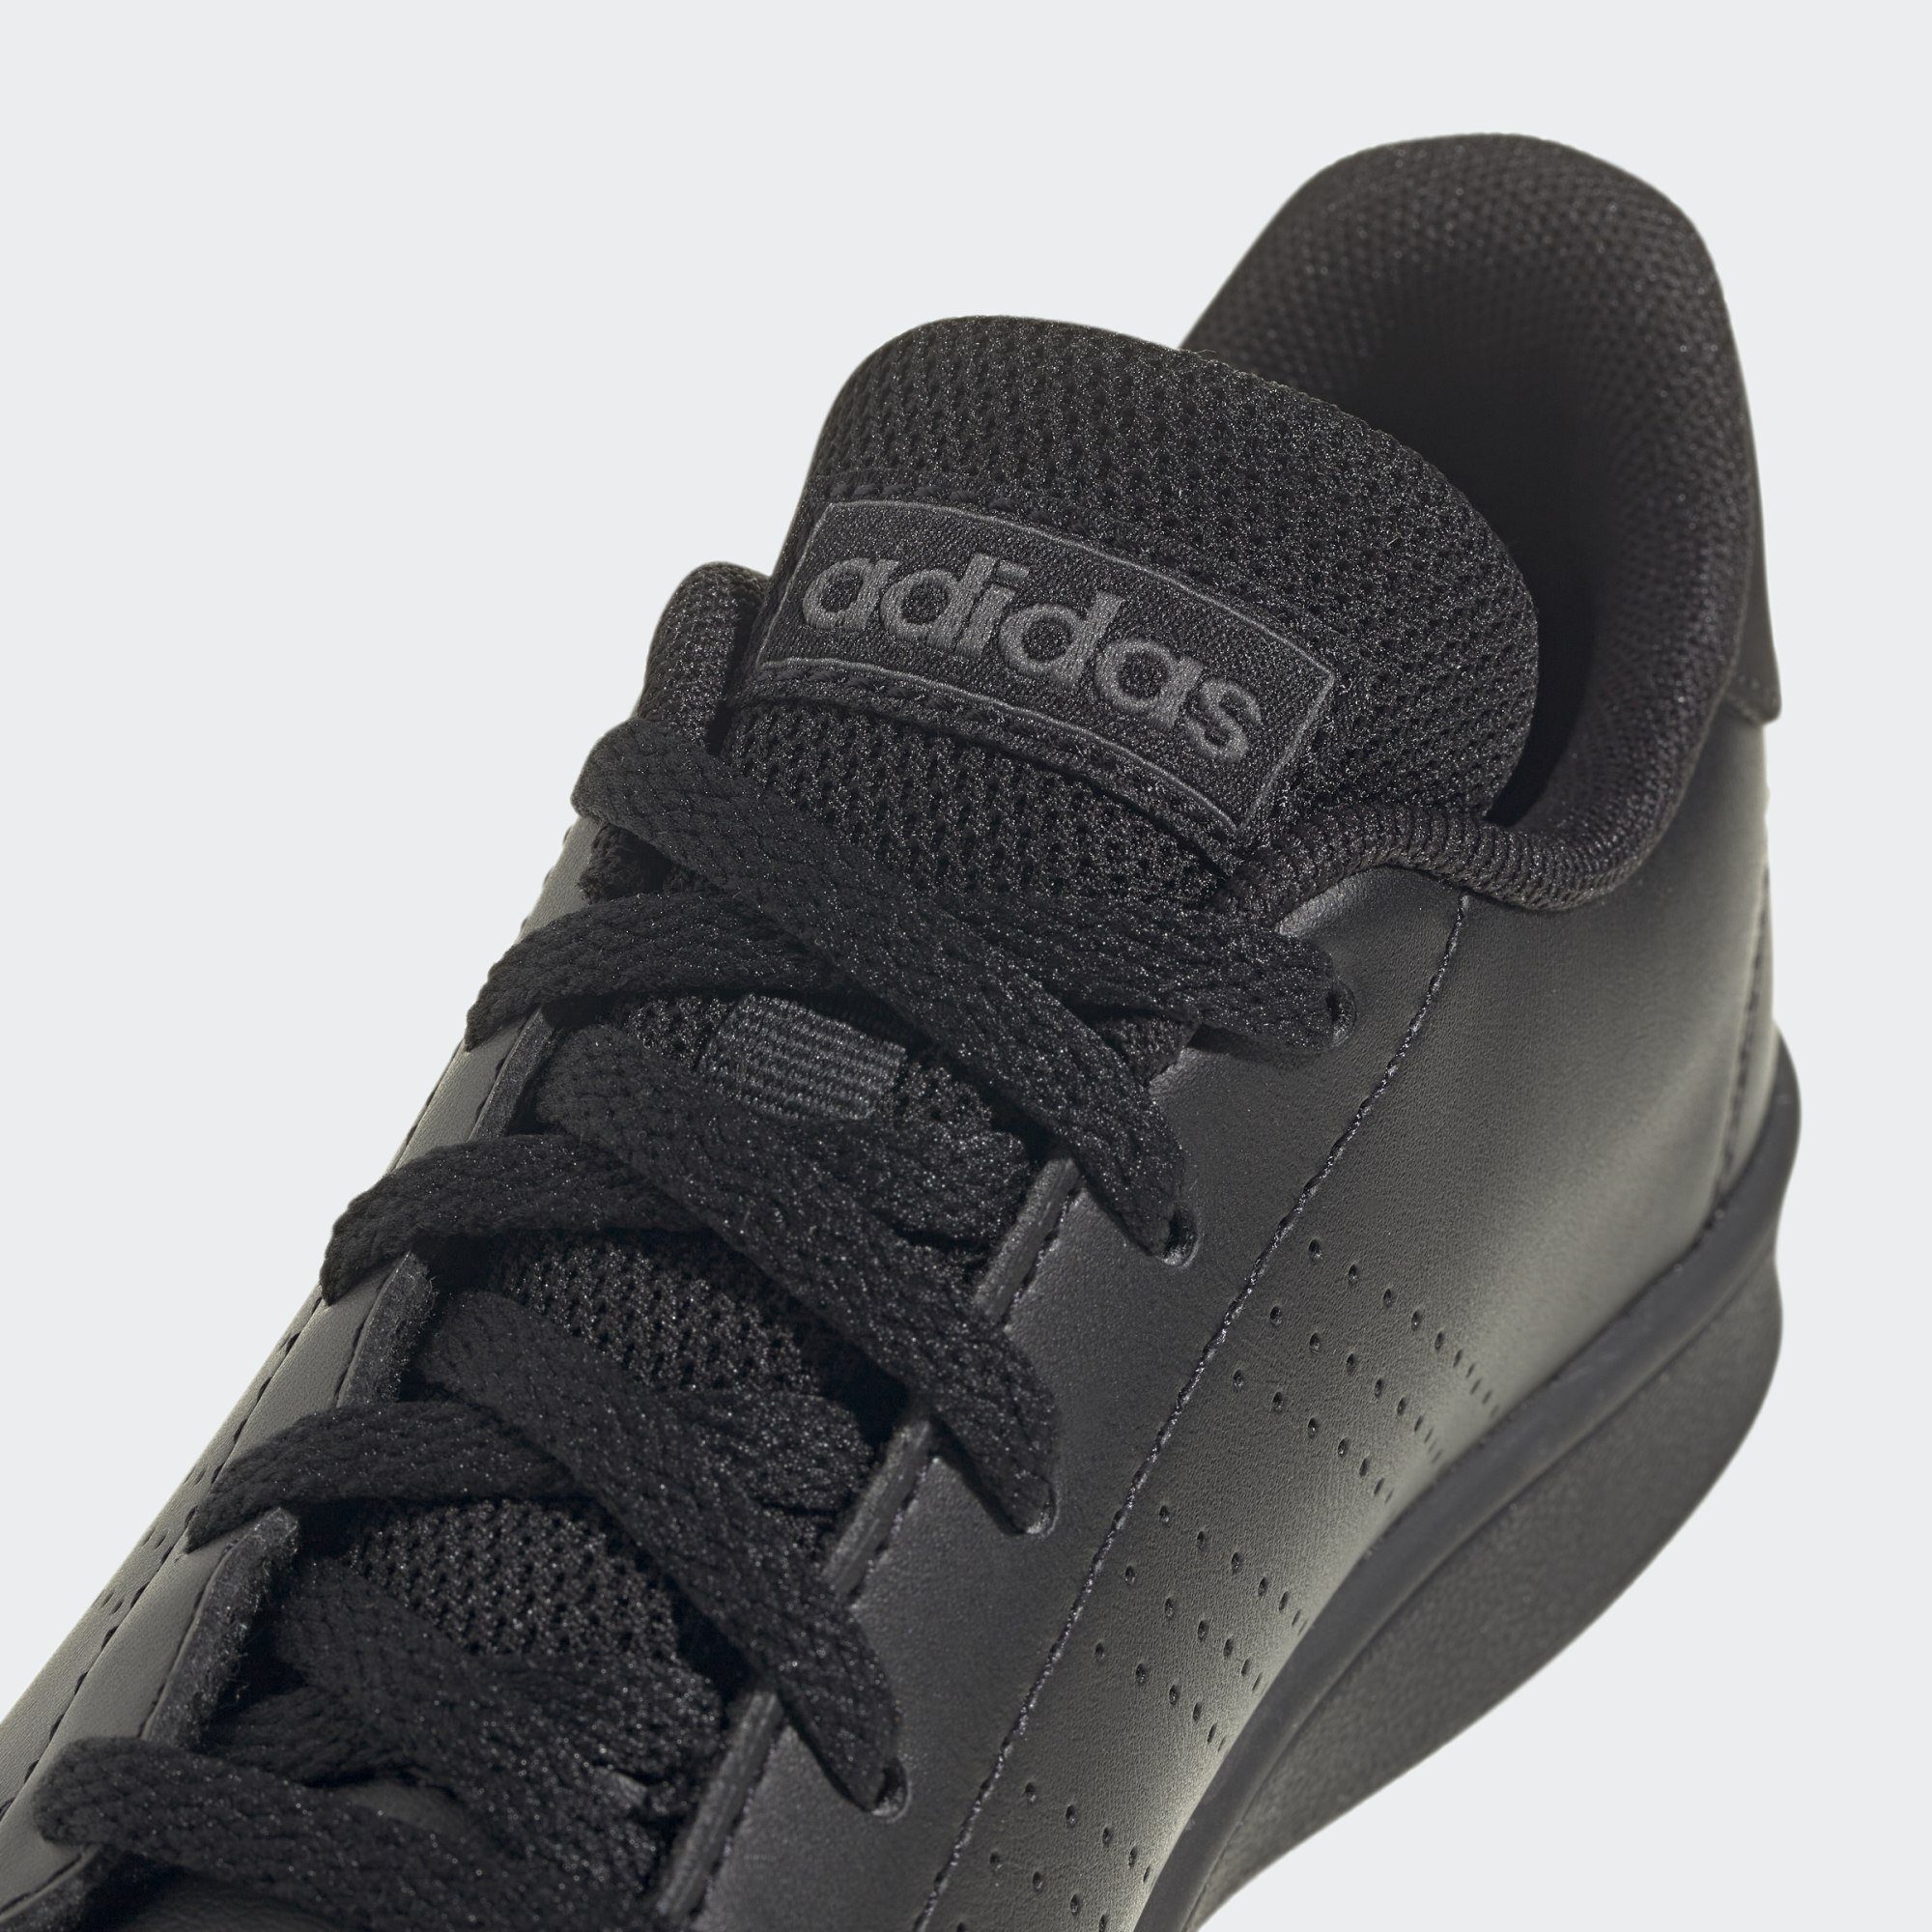 / LACE Grey Sneaker LIFESTYLE / Six Black Black adidas ADVANTAGE Core Core Sportswear SCHUH COURT